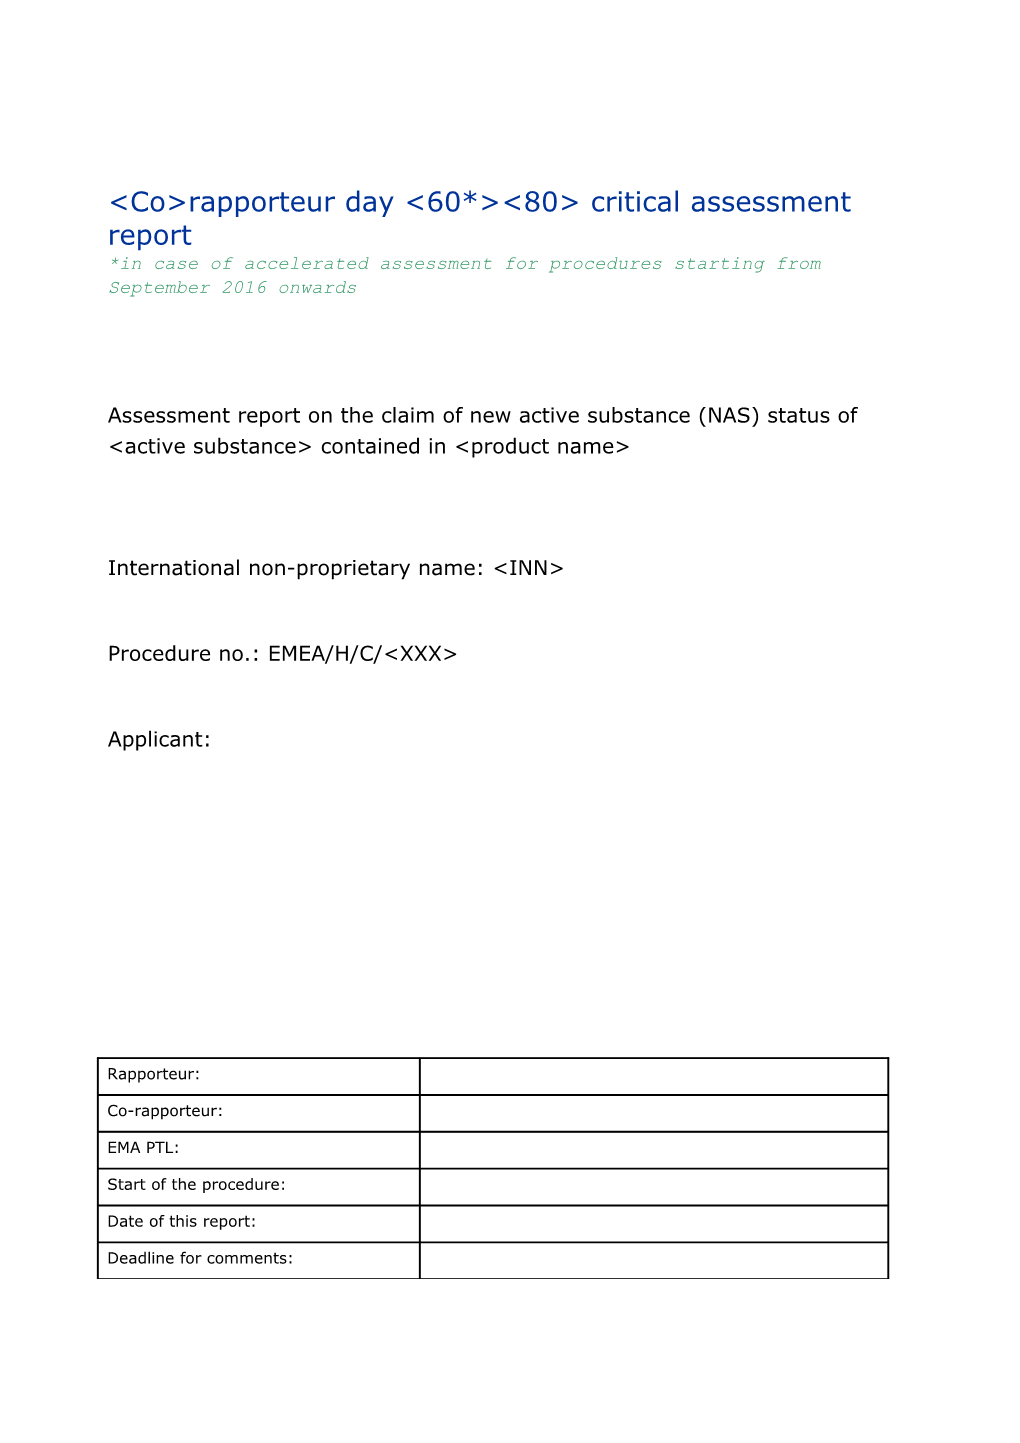 D80 Assessment Report - New Active Substance Status Template Rev 10.16